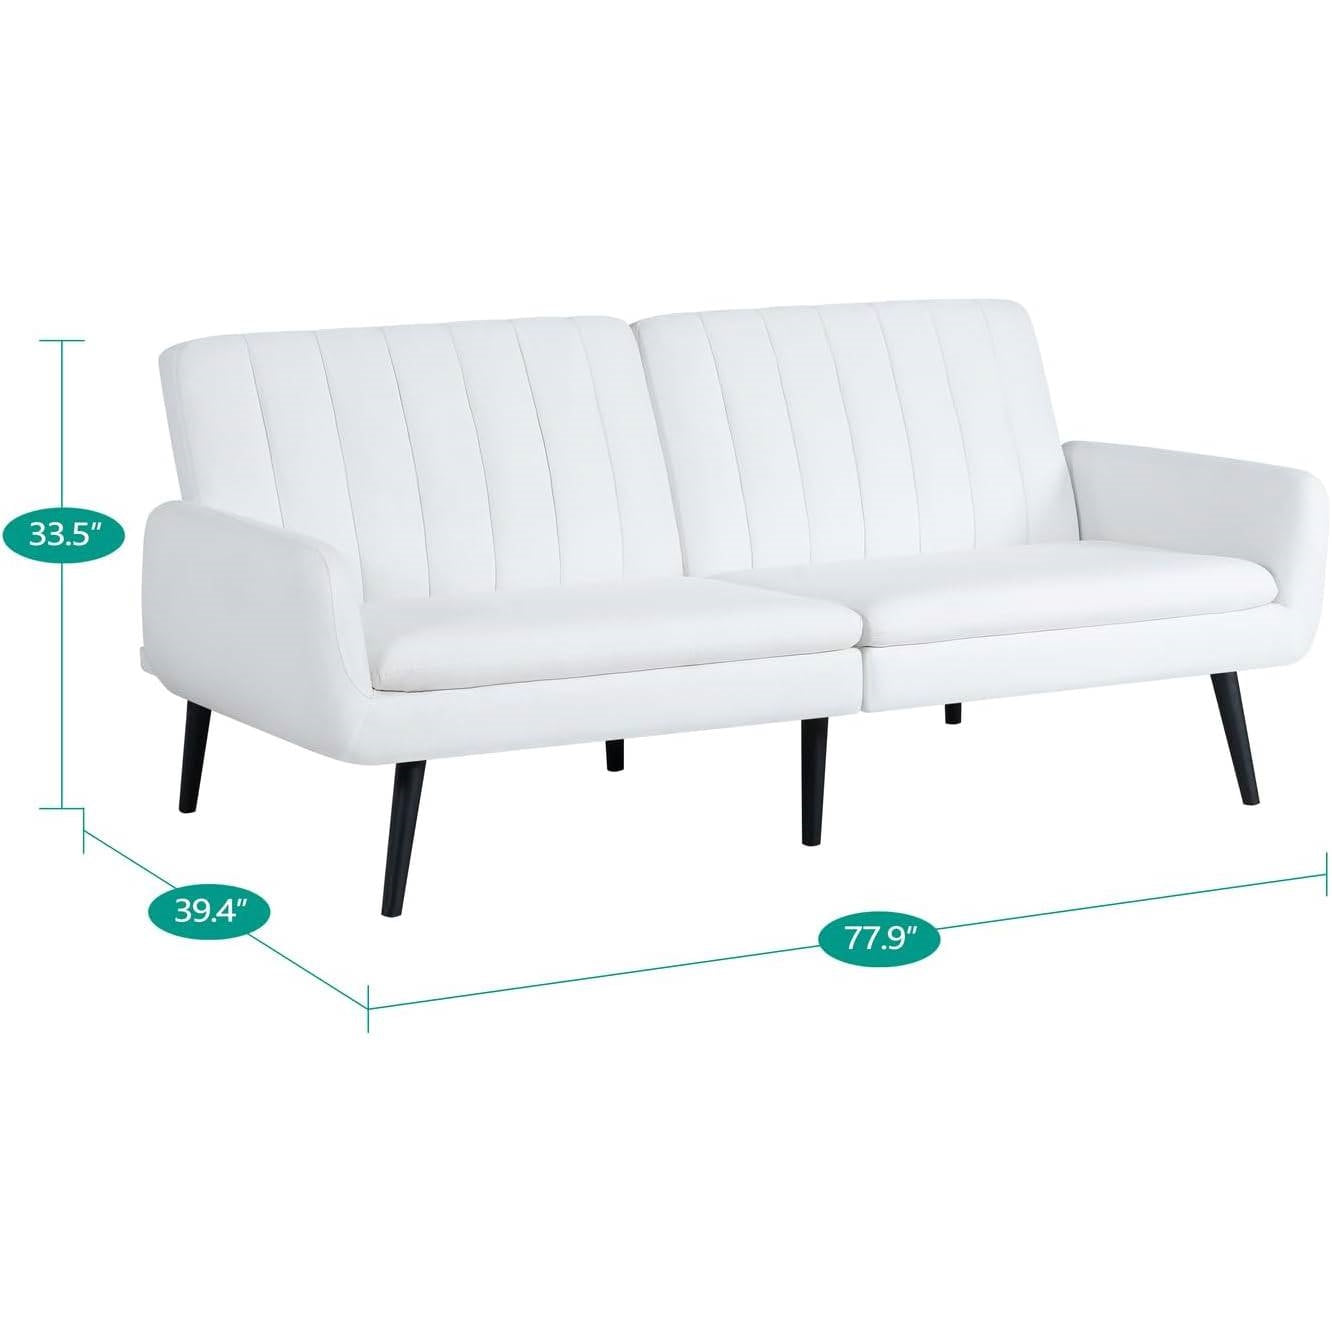 Modern Mid-Century Futon Sleeper Sofa Bed in White Linen Fabric